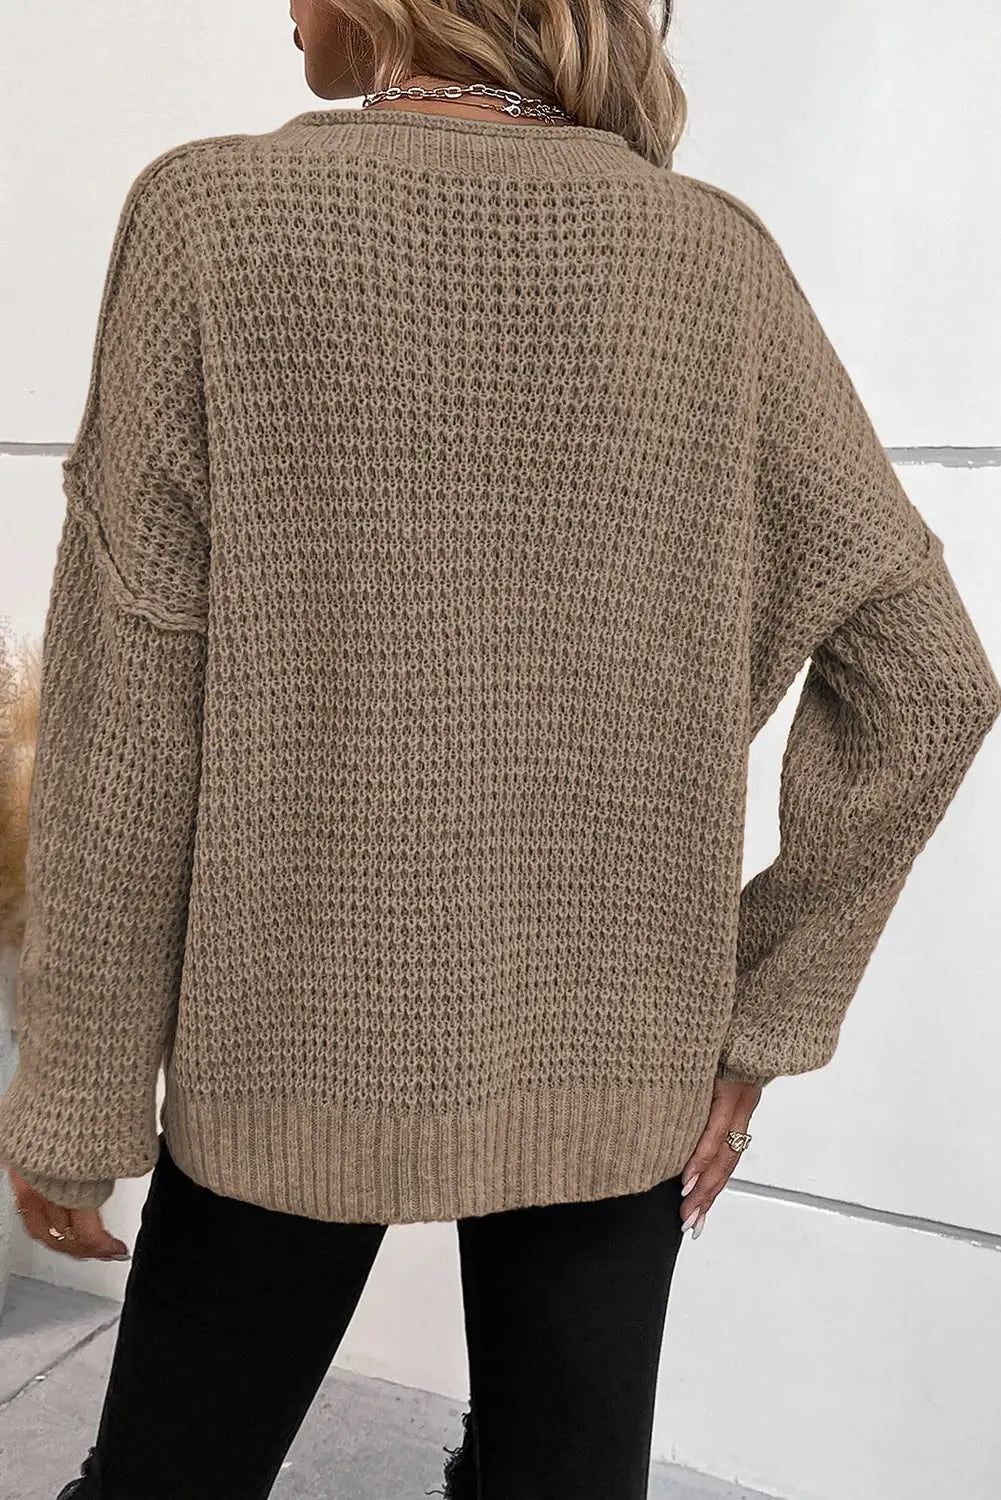 Khaki pointelle knit button v neck drop shoulder sweater - sweaters & cardigans